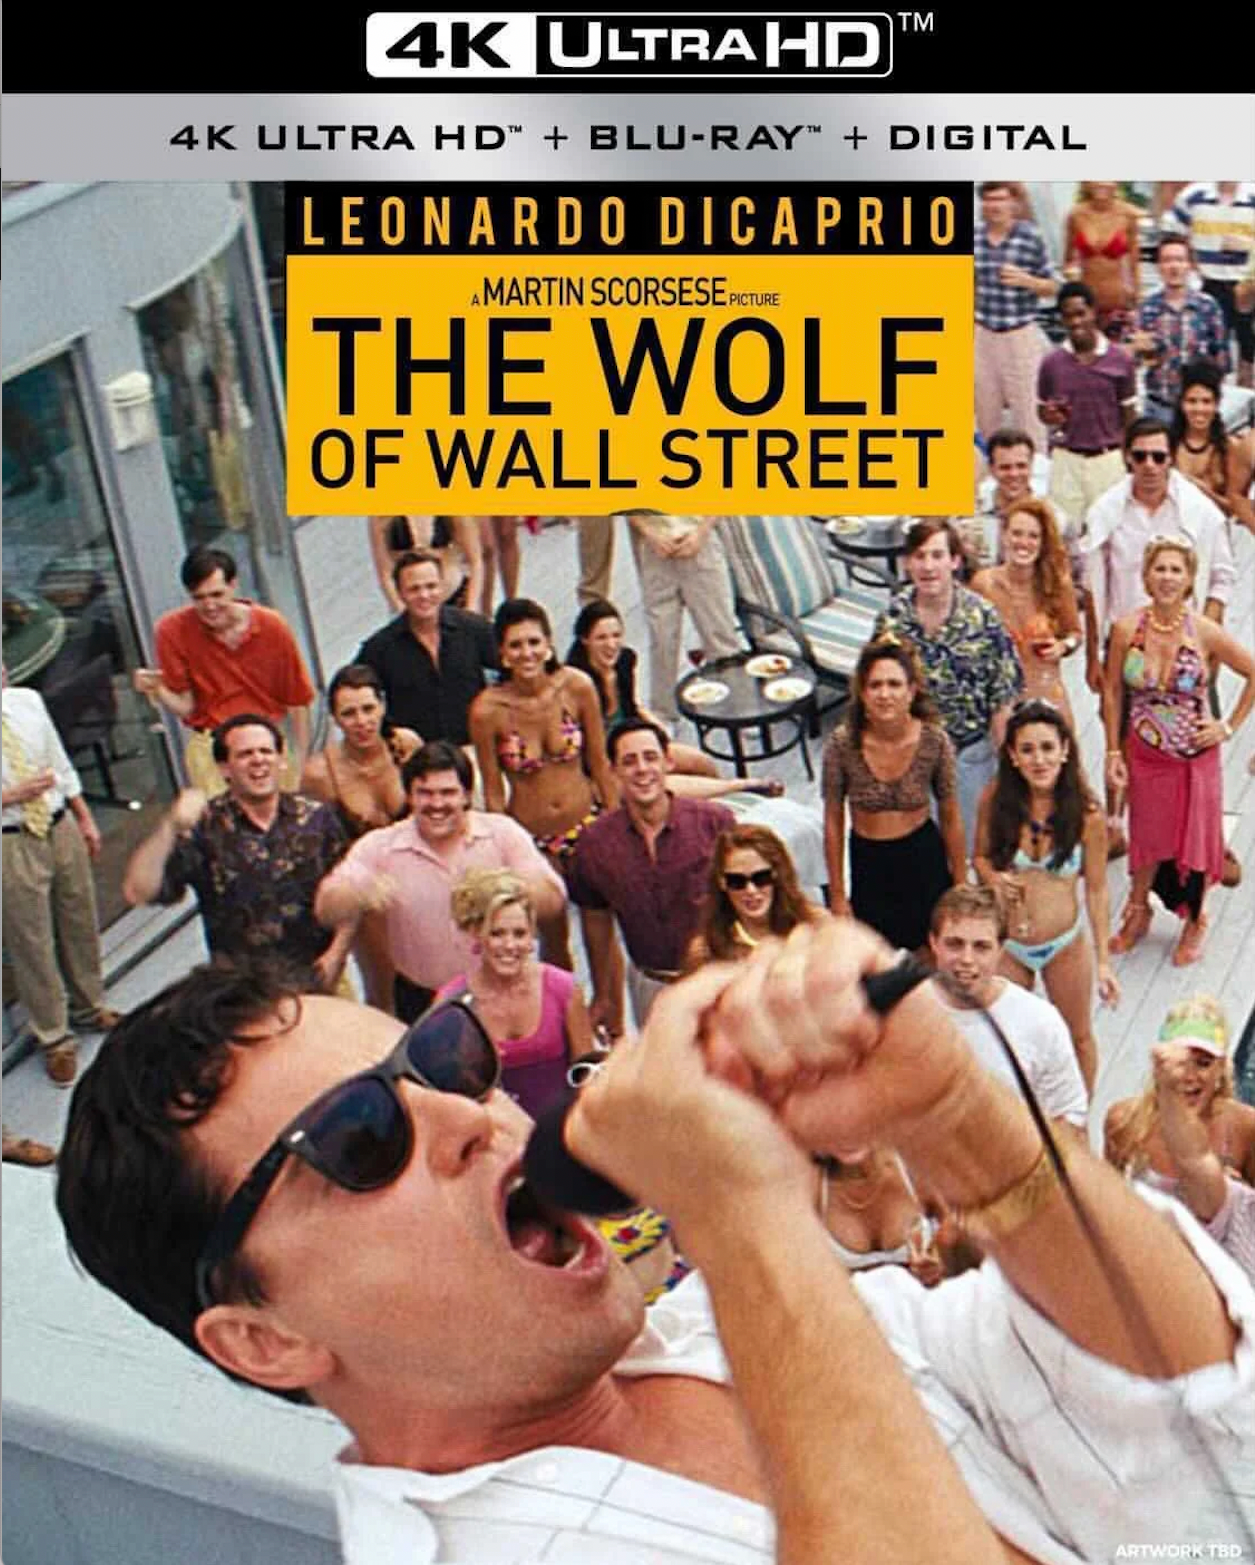 The Wolf of Wall Street (2013) Vudu 4K or iTunes 4K code